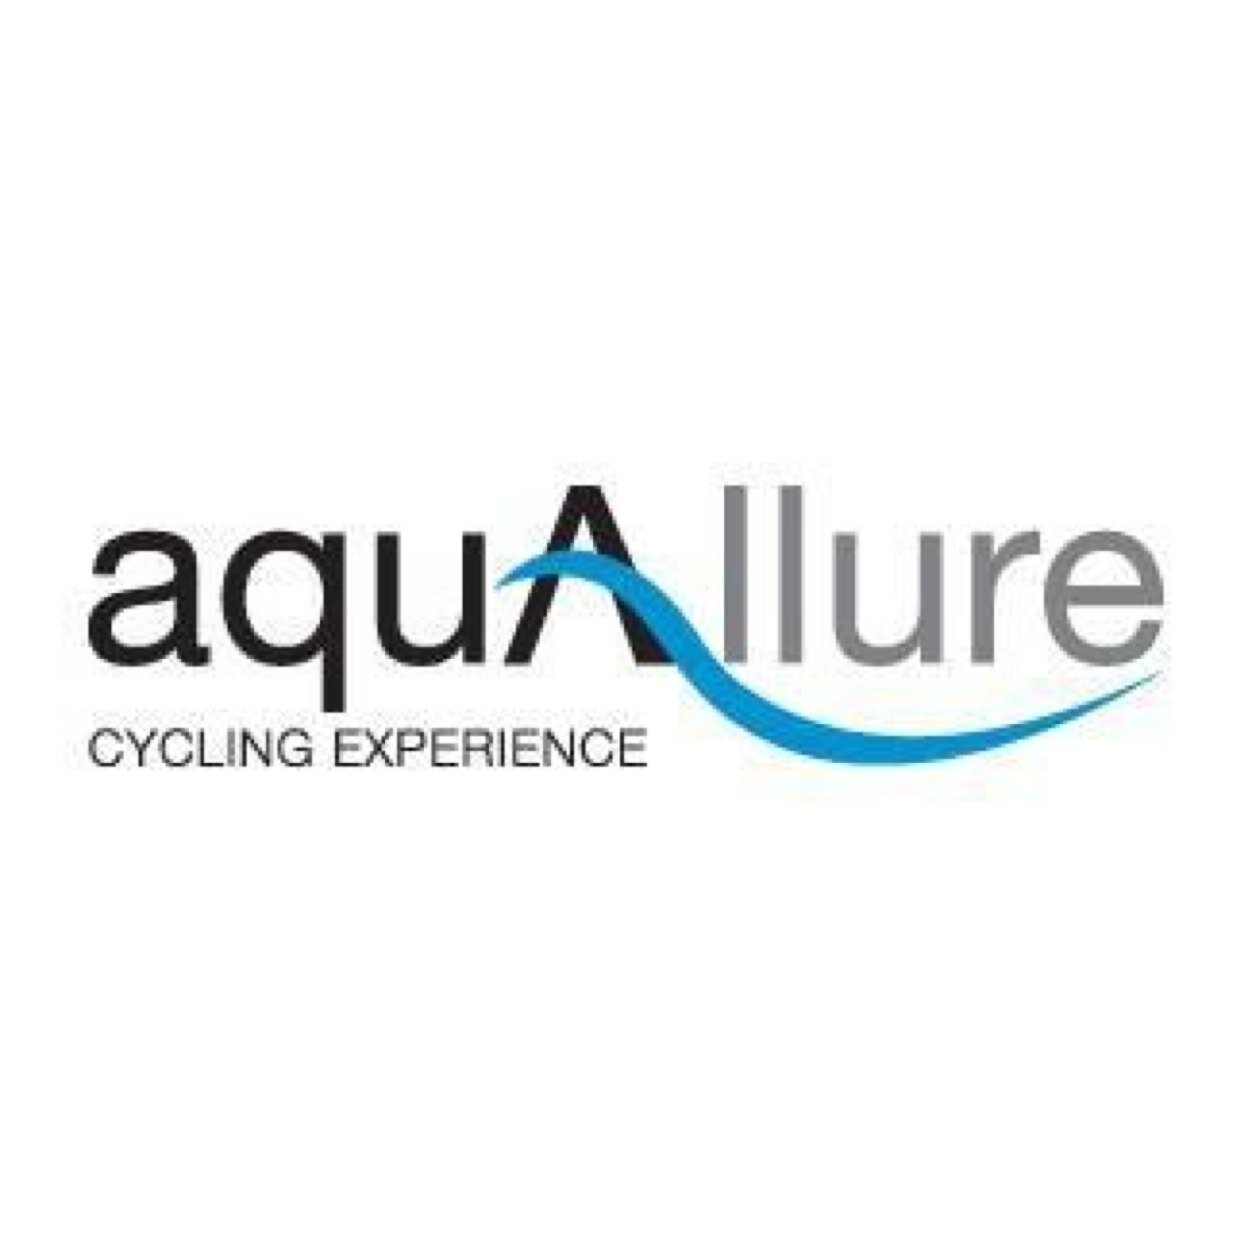 The first aqua-cycling provider in London. Based at @CPLDocklands. Winner of @TatlerUK Gym Award 2015